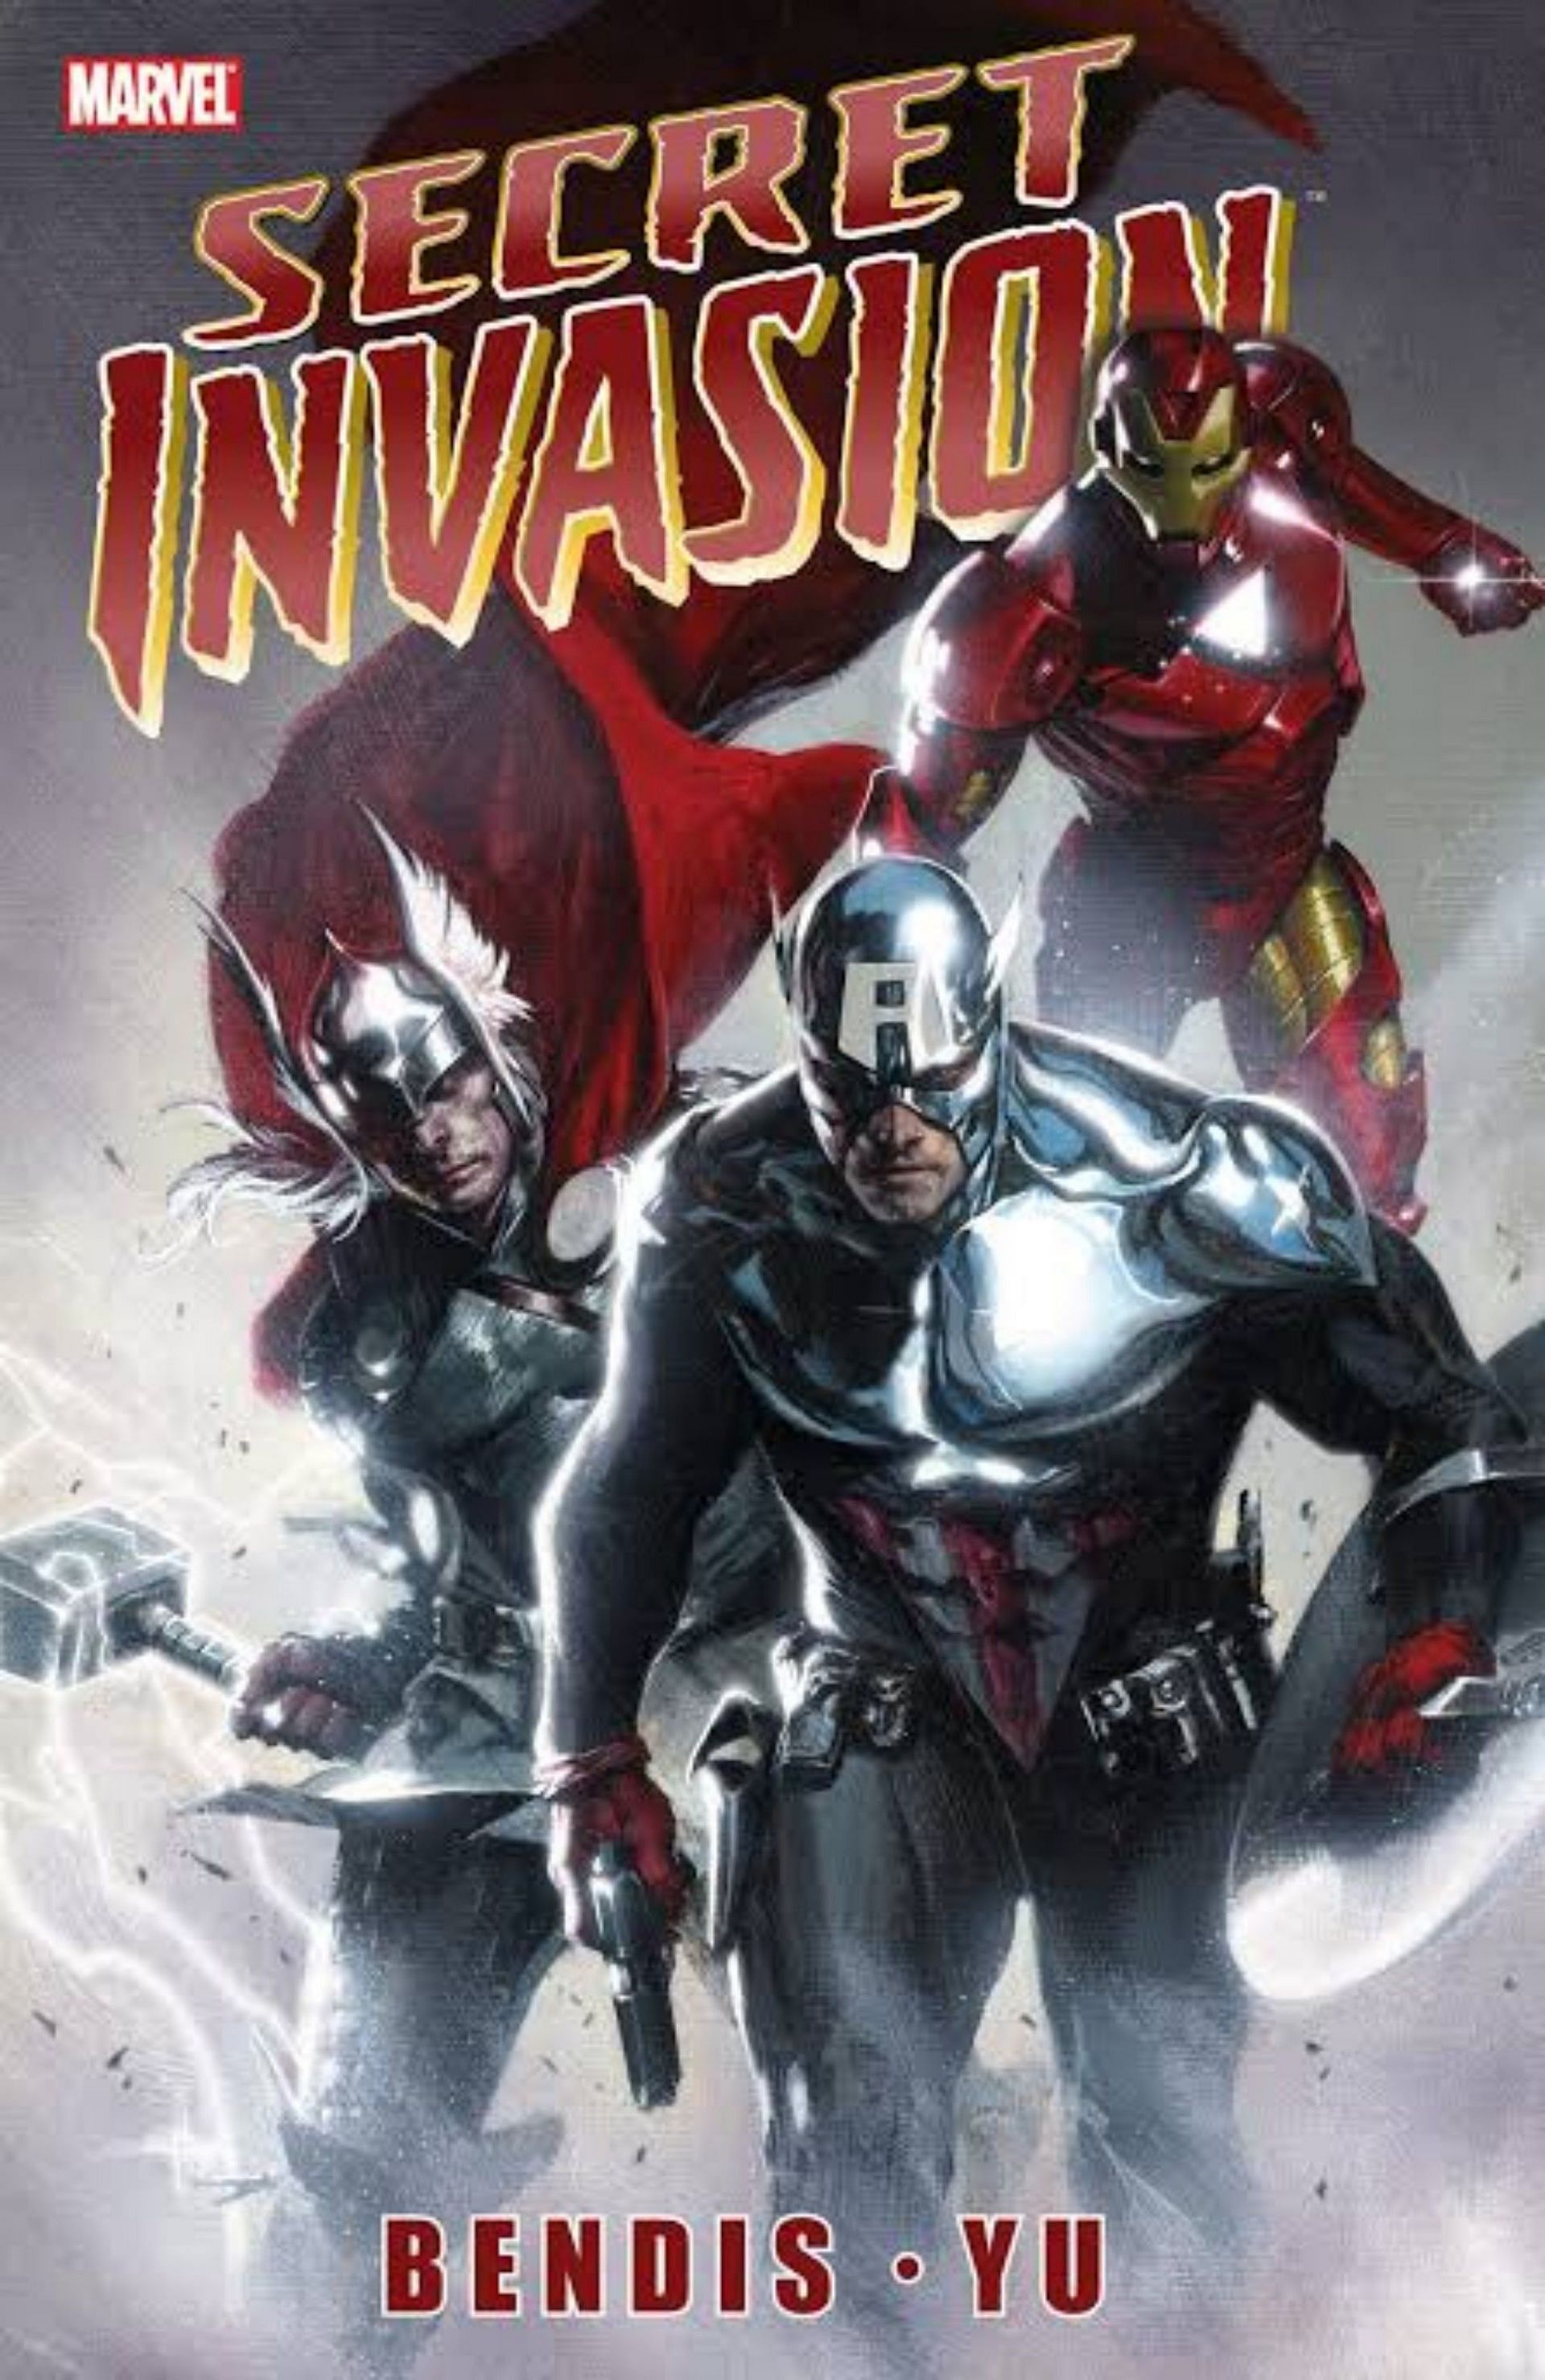 Secret Invasion comic book cover (Image via Marvel Comics)